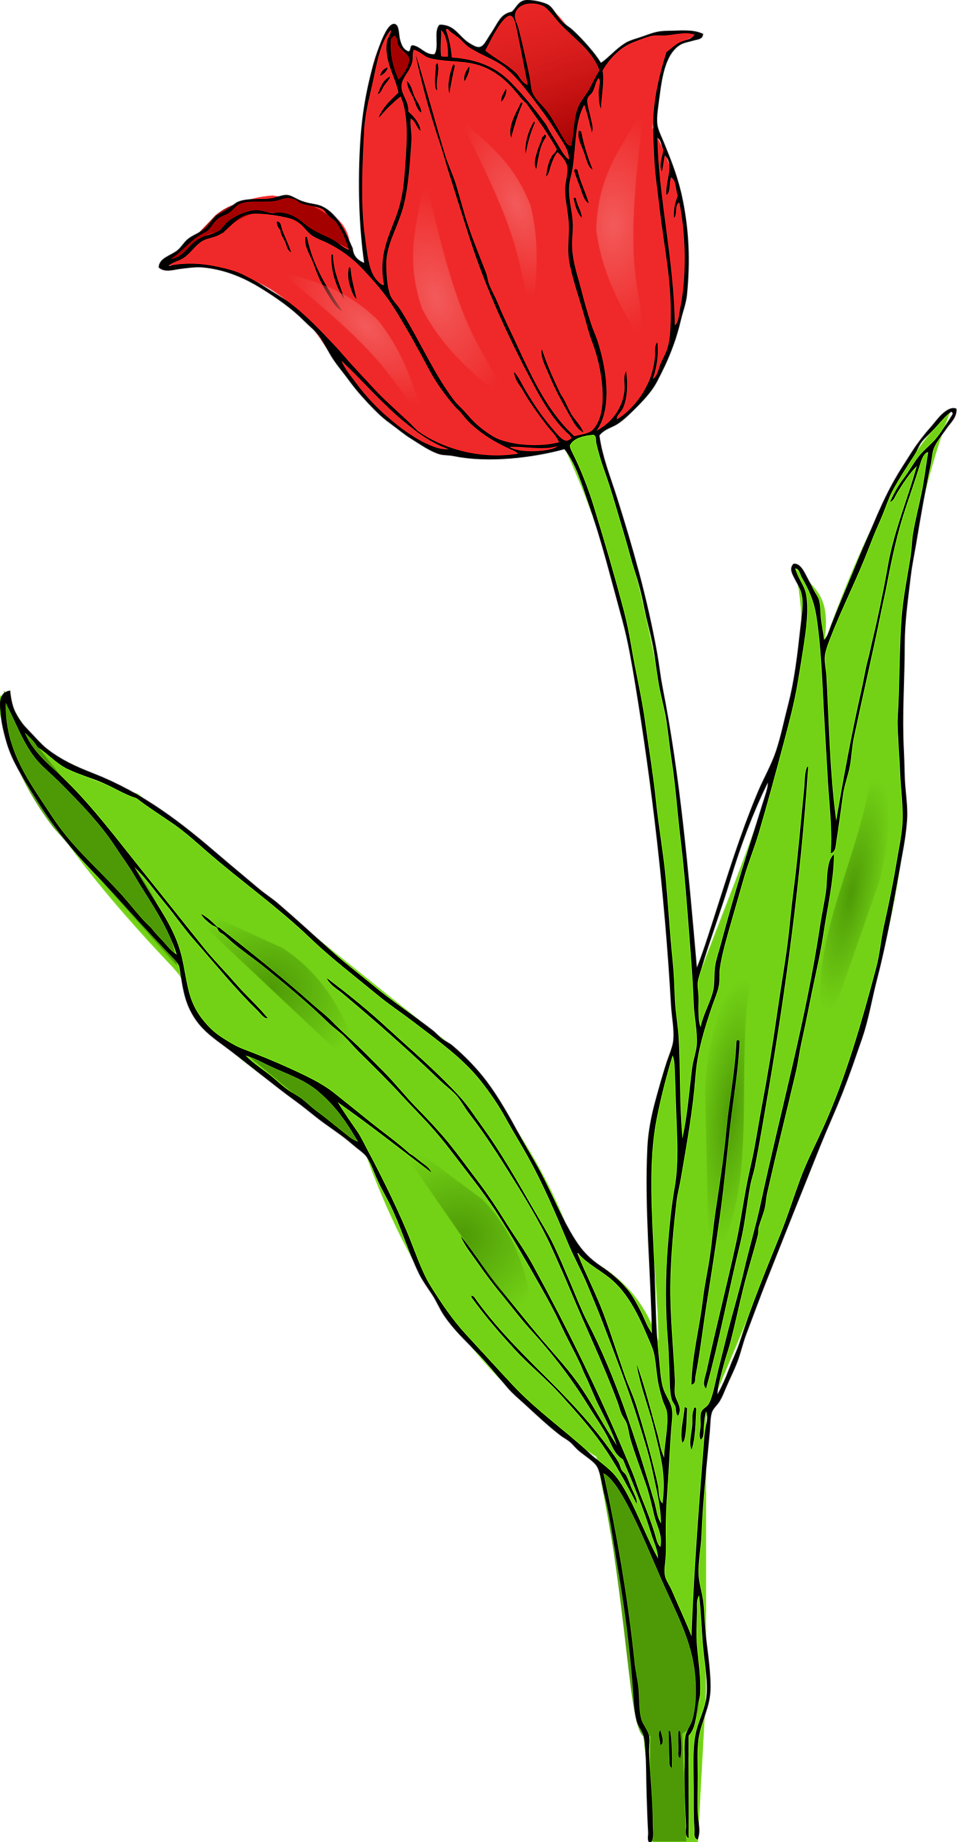 Clipart spring tulip. Free stock photo illustration